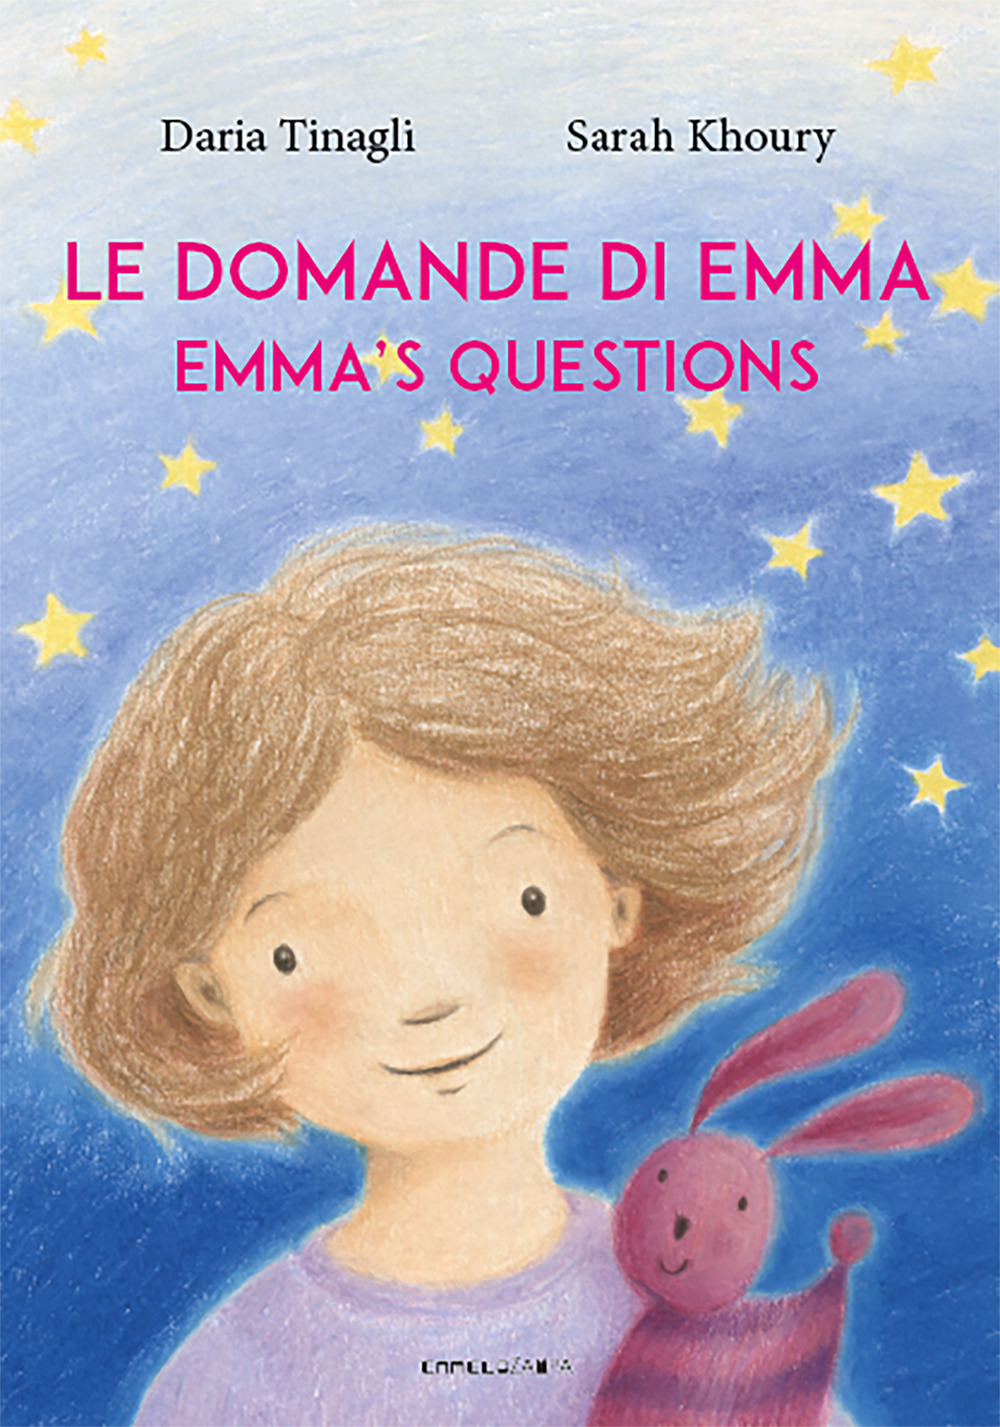 Le domande di Emma. Ediz. italiana e inglese